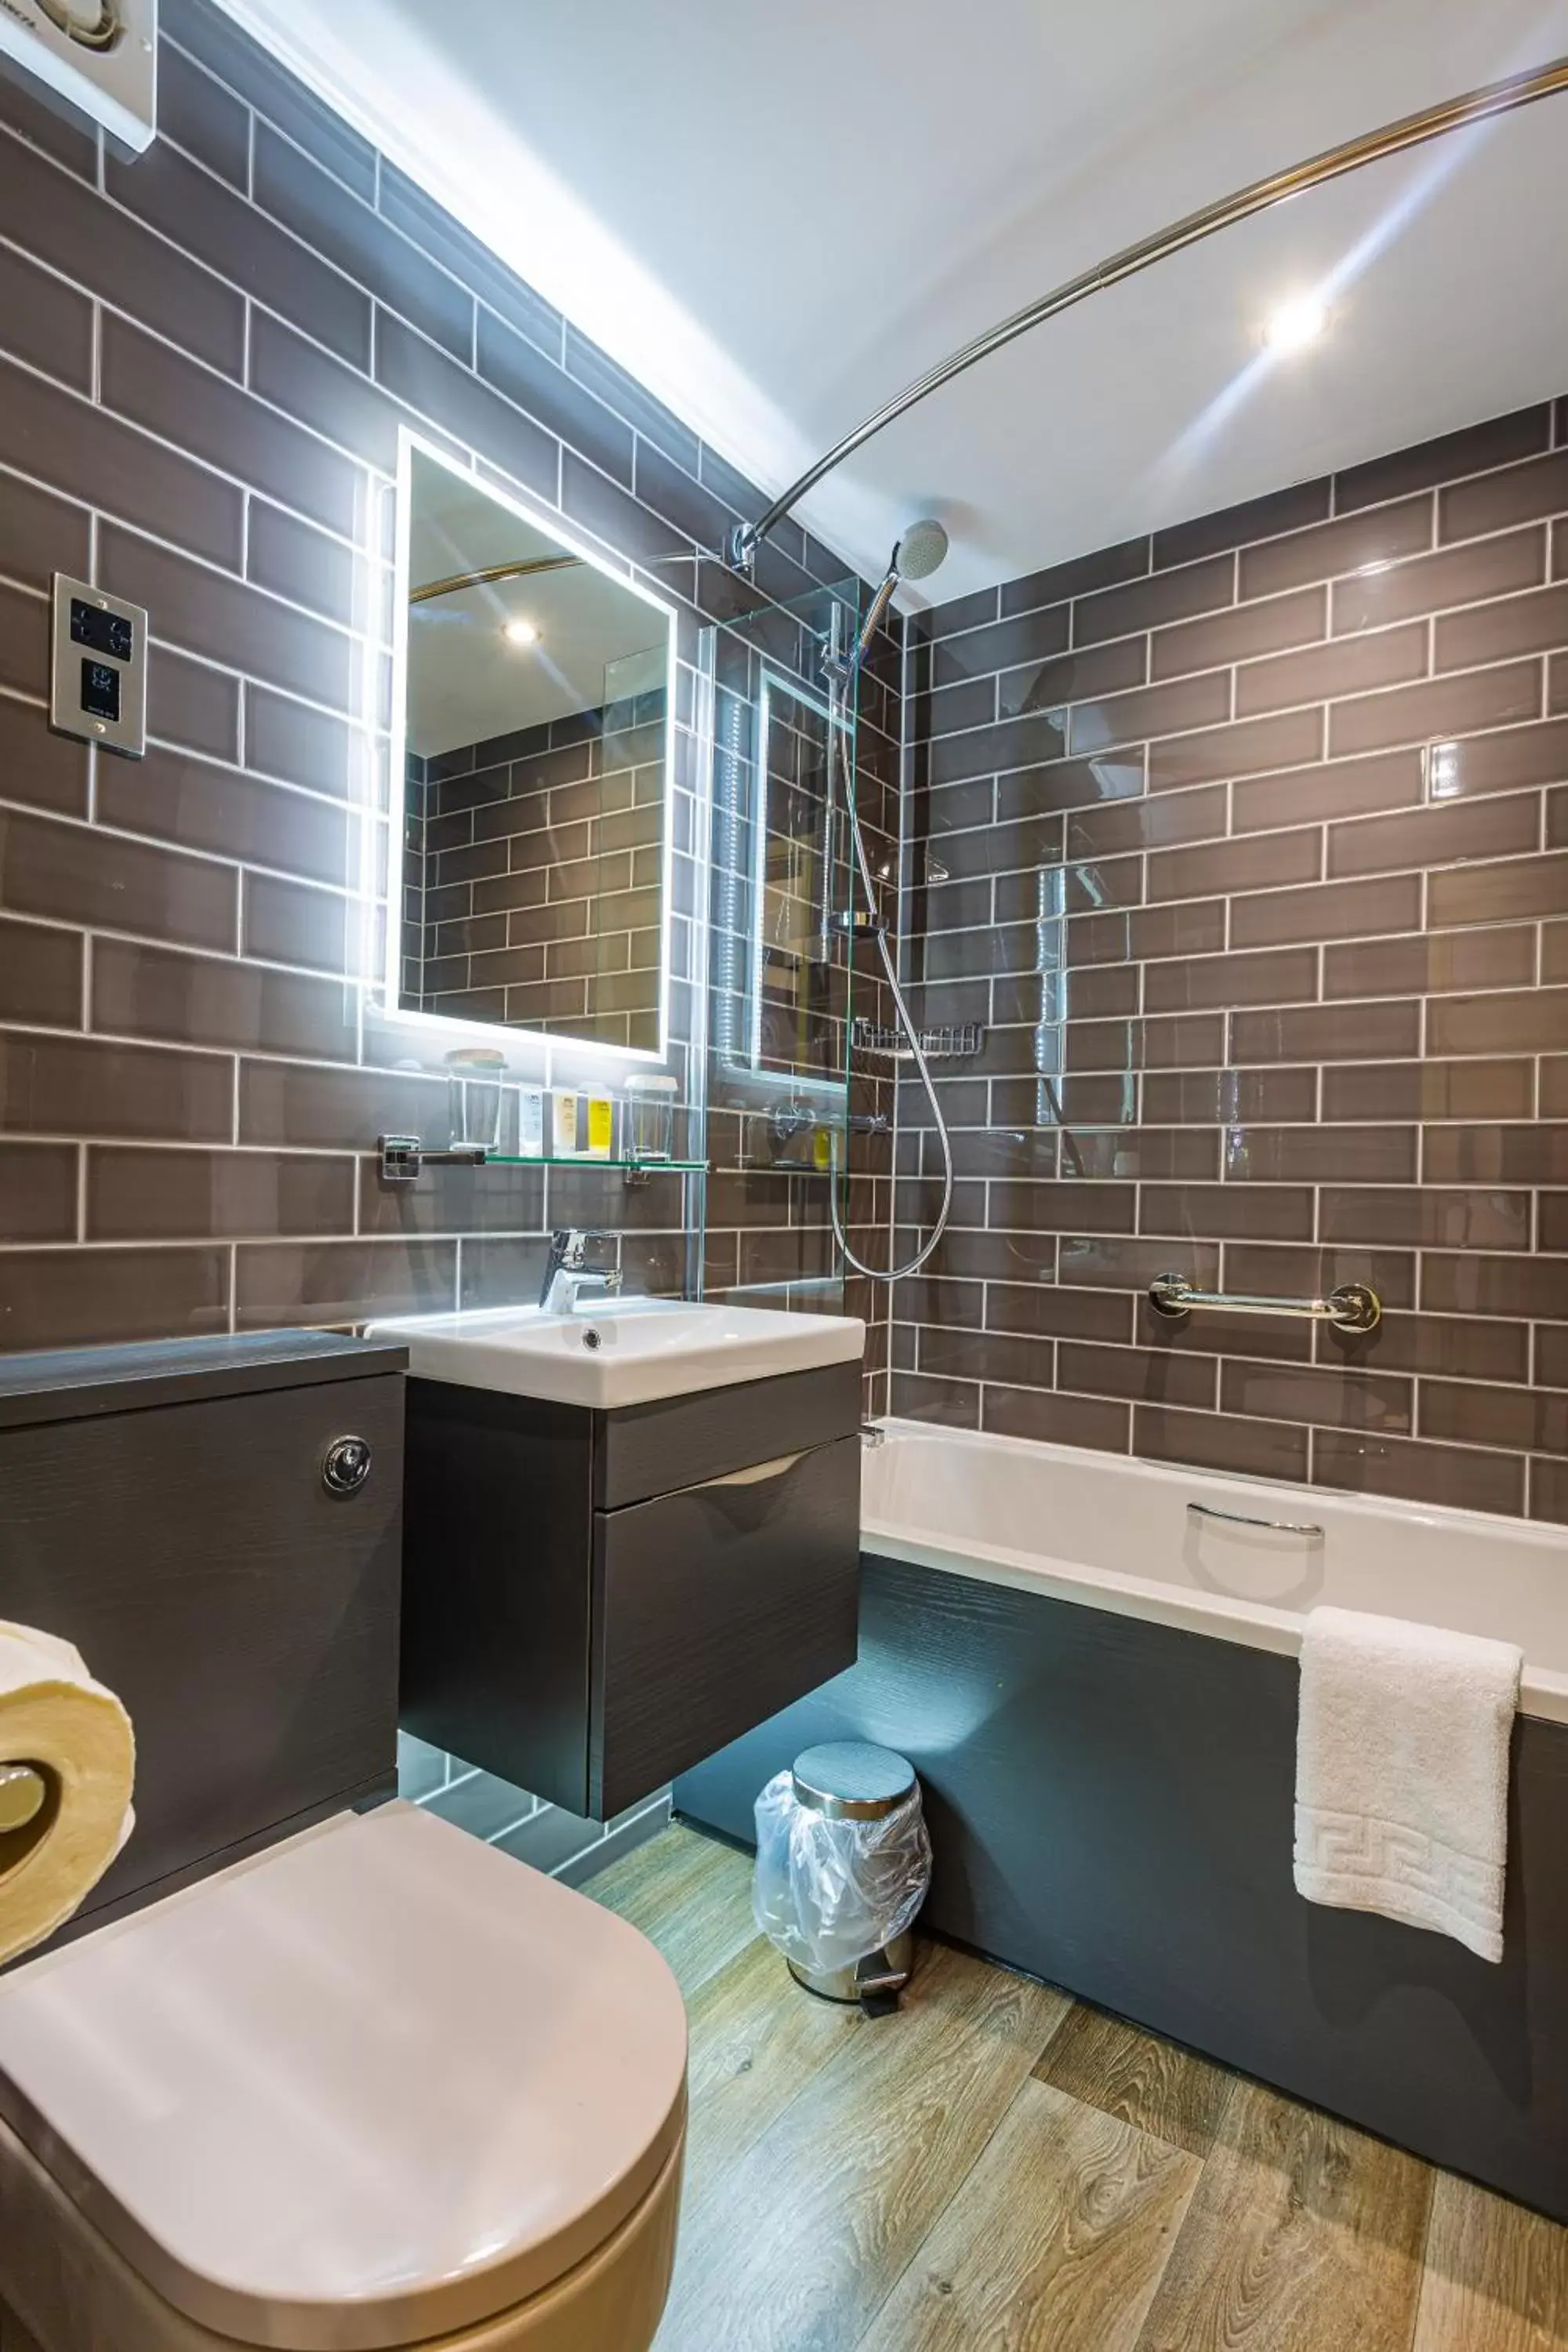 Bathroom in The Rutland Arms Hotel, Bakewell, Derbyshire